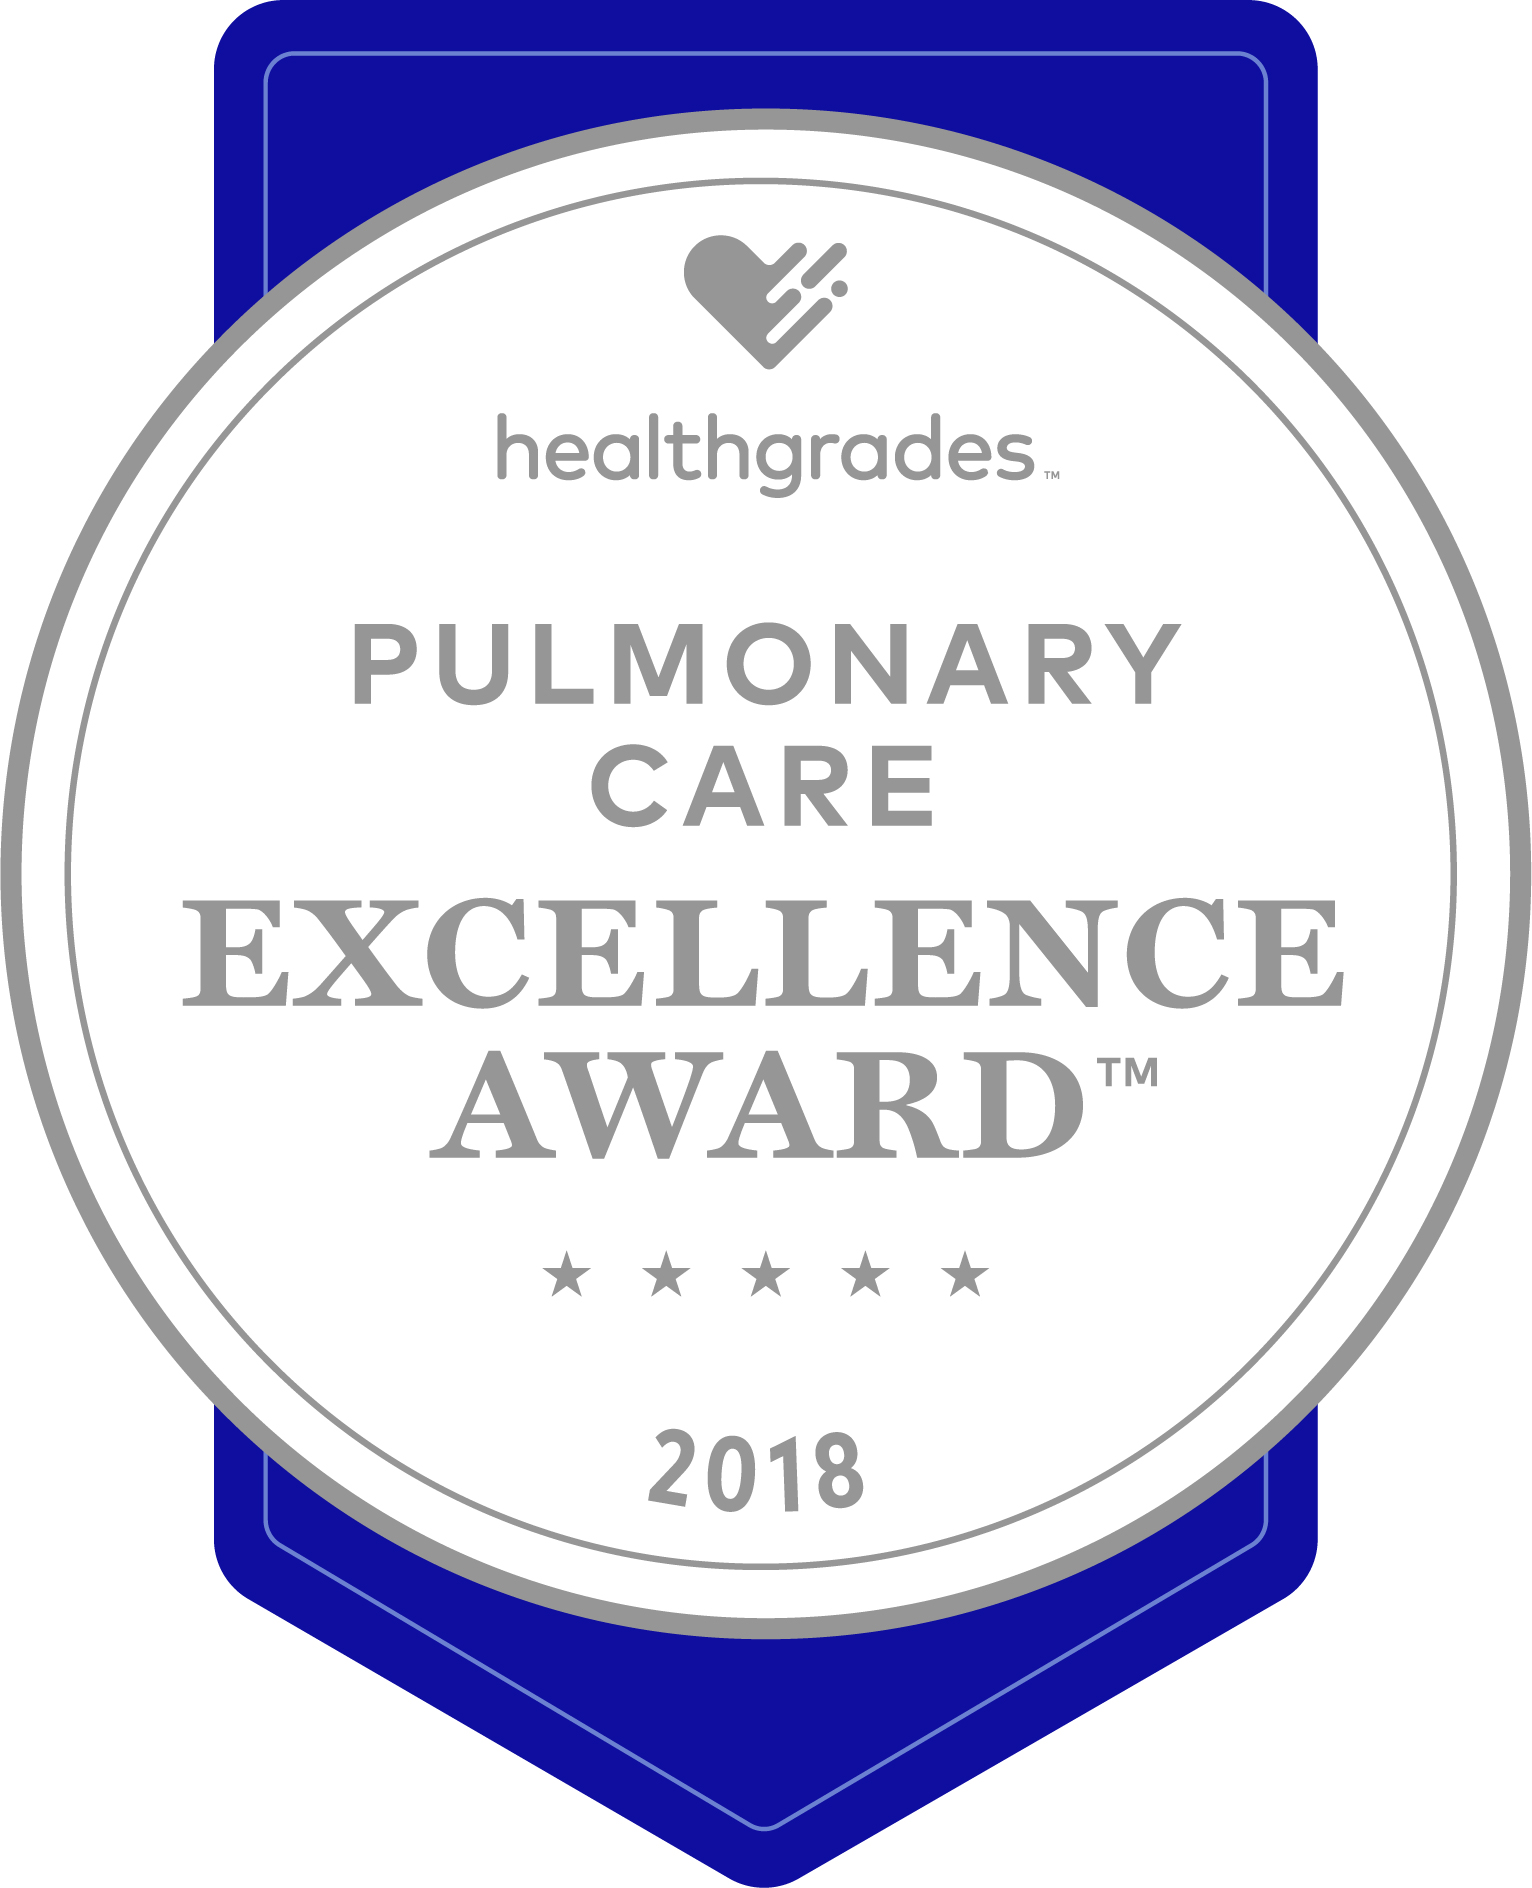 HG_Pulmonary_Care_Award_Image_2018